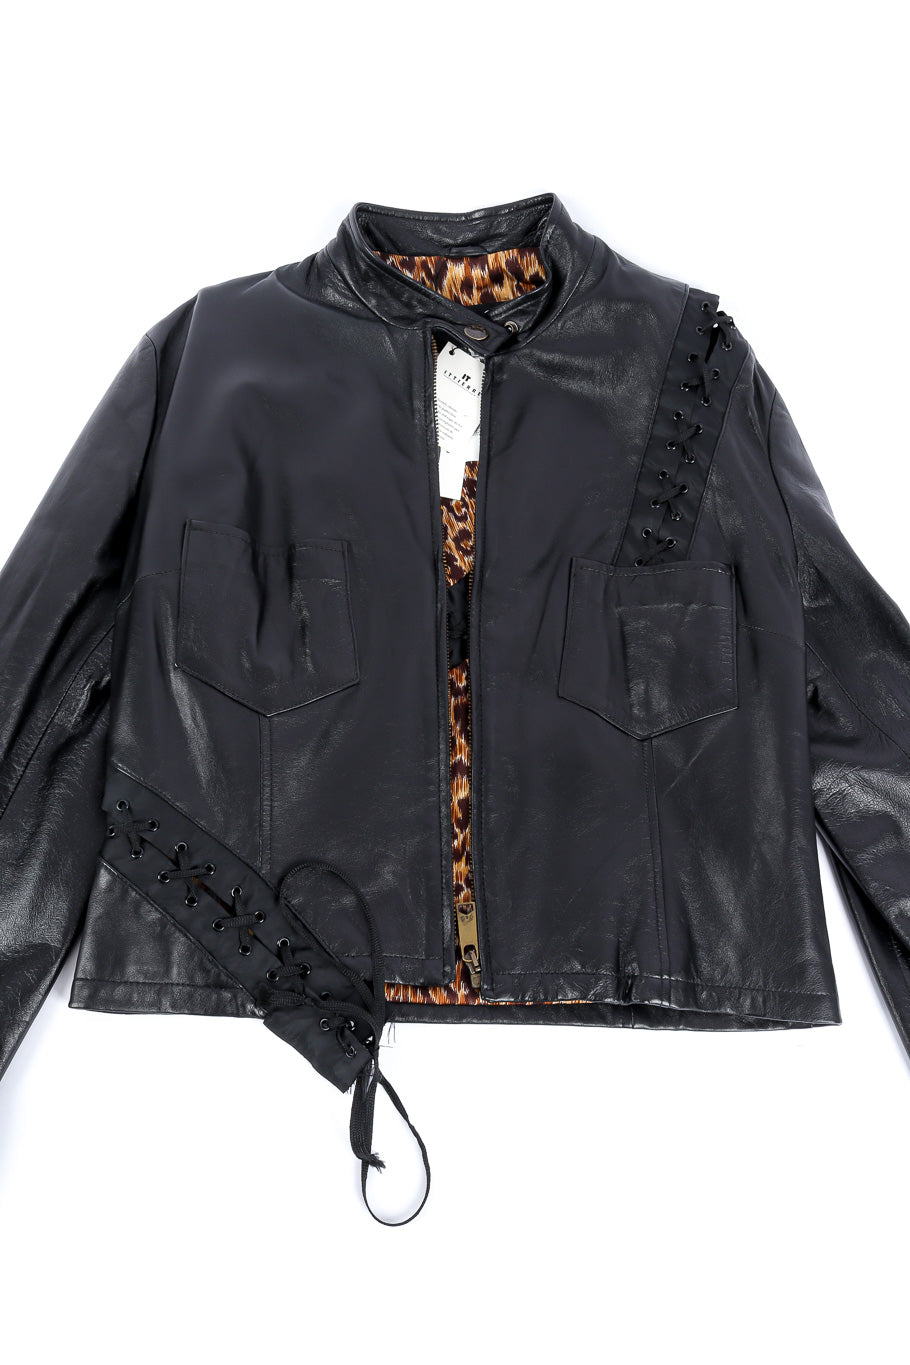 Dolce & Gabbana leather panther jacket flat-lay @recessla